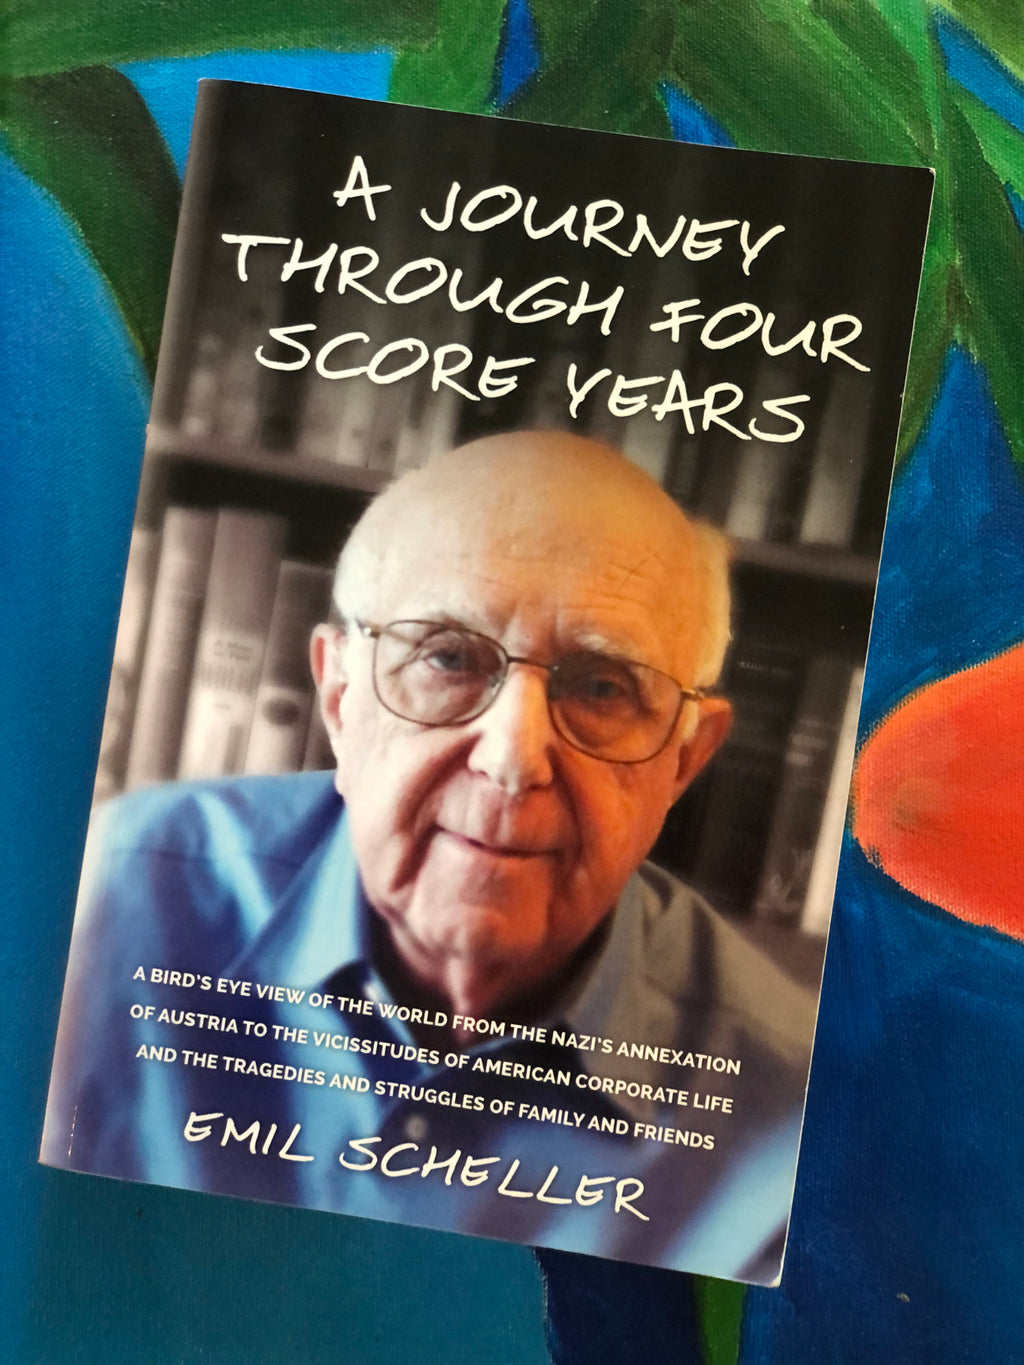 A Journey Through Four Score Years- By Emil Scheller